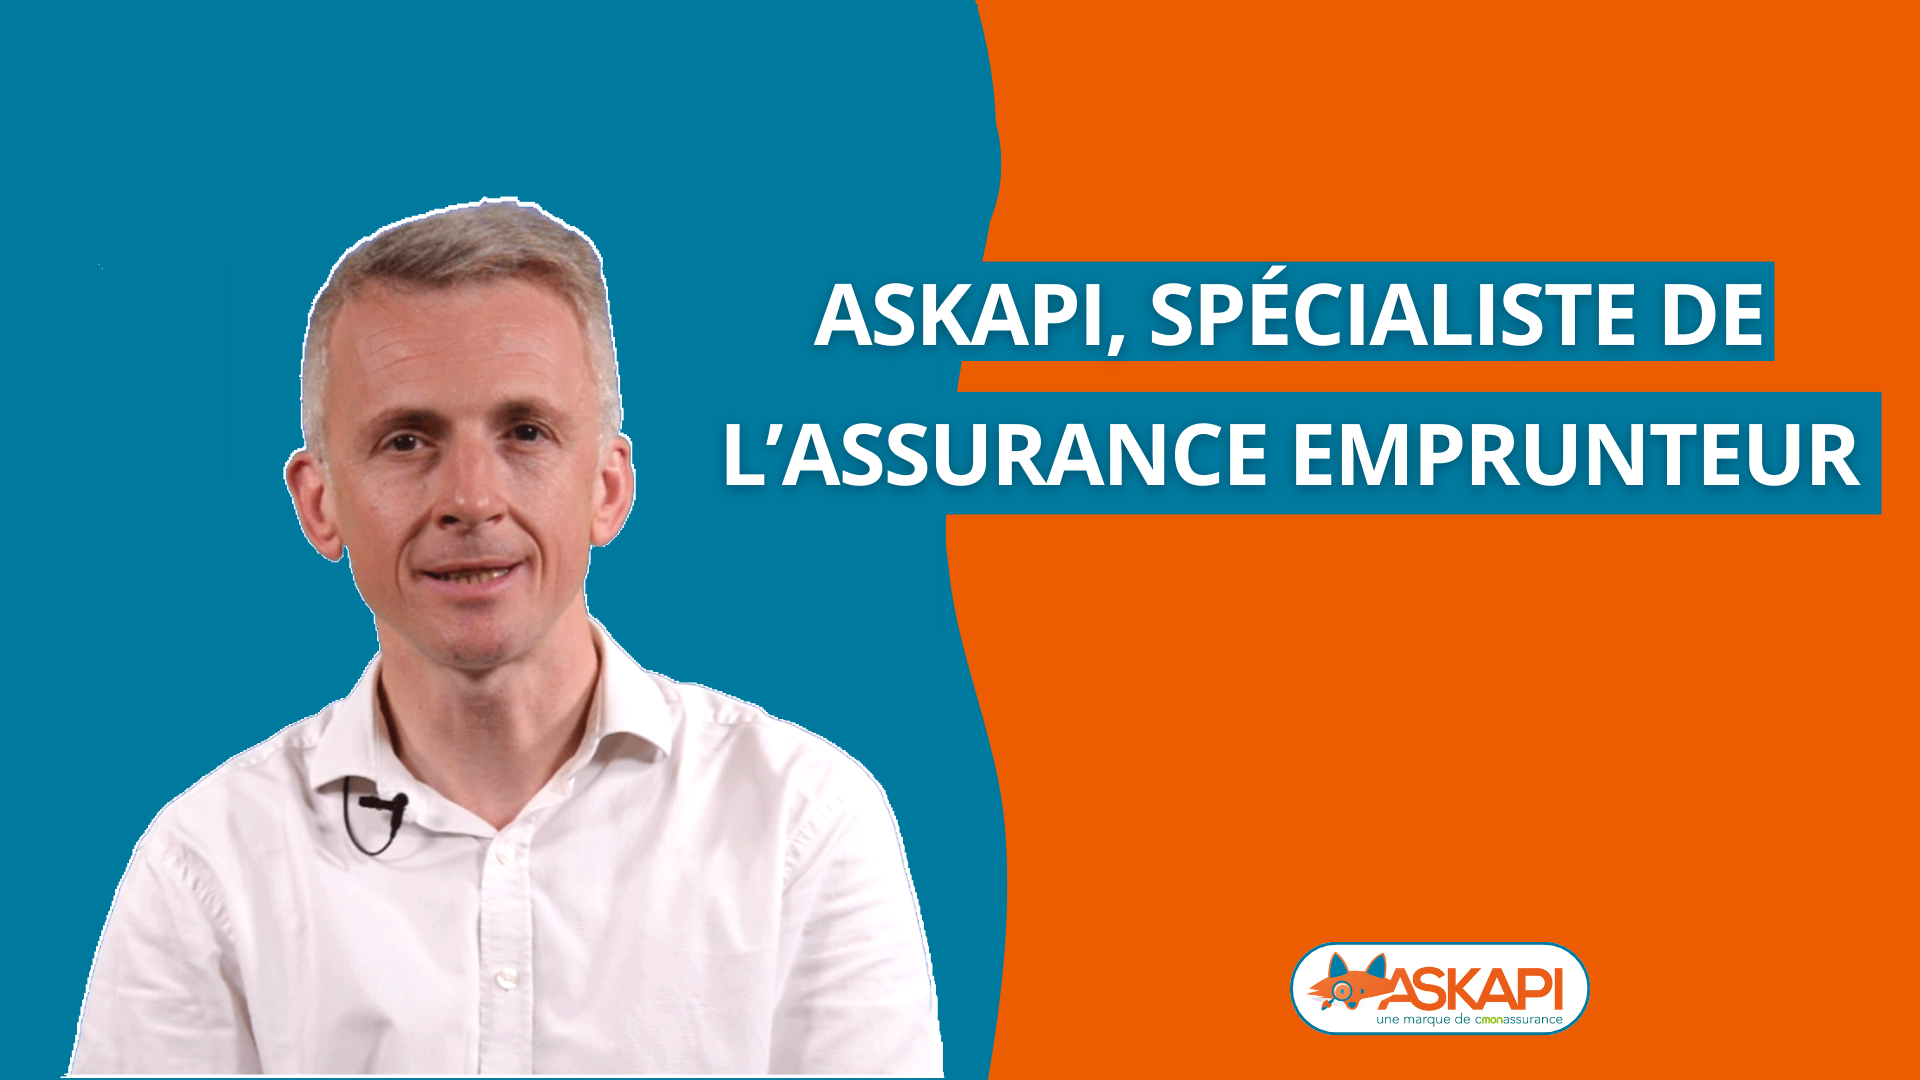 Askapi, spécialiste de l'assurance emprunteur